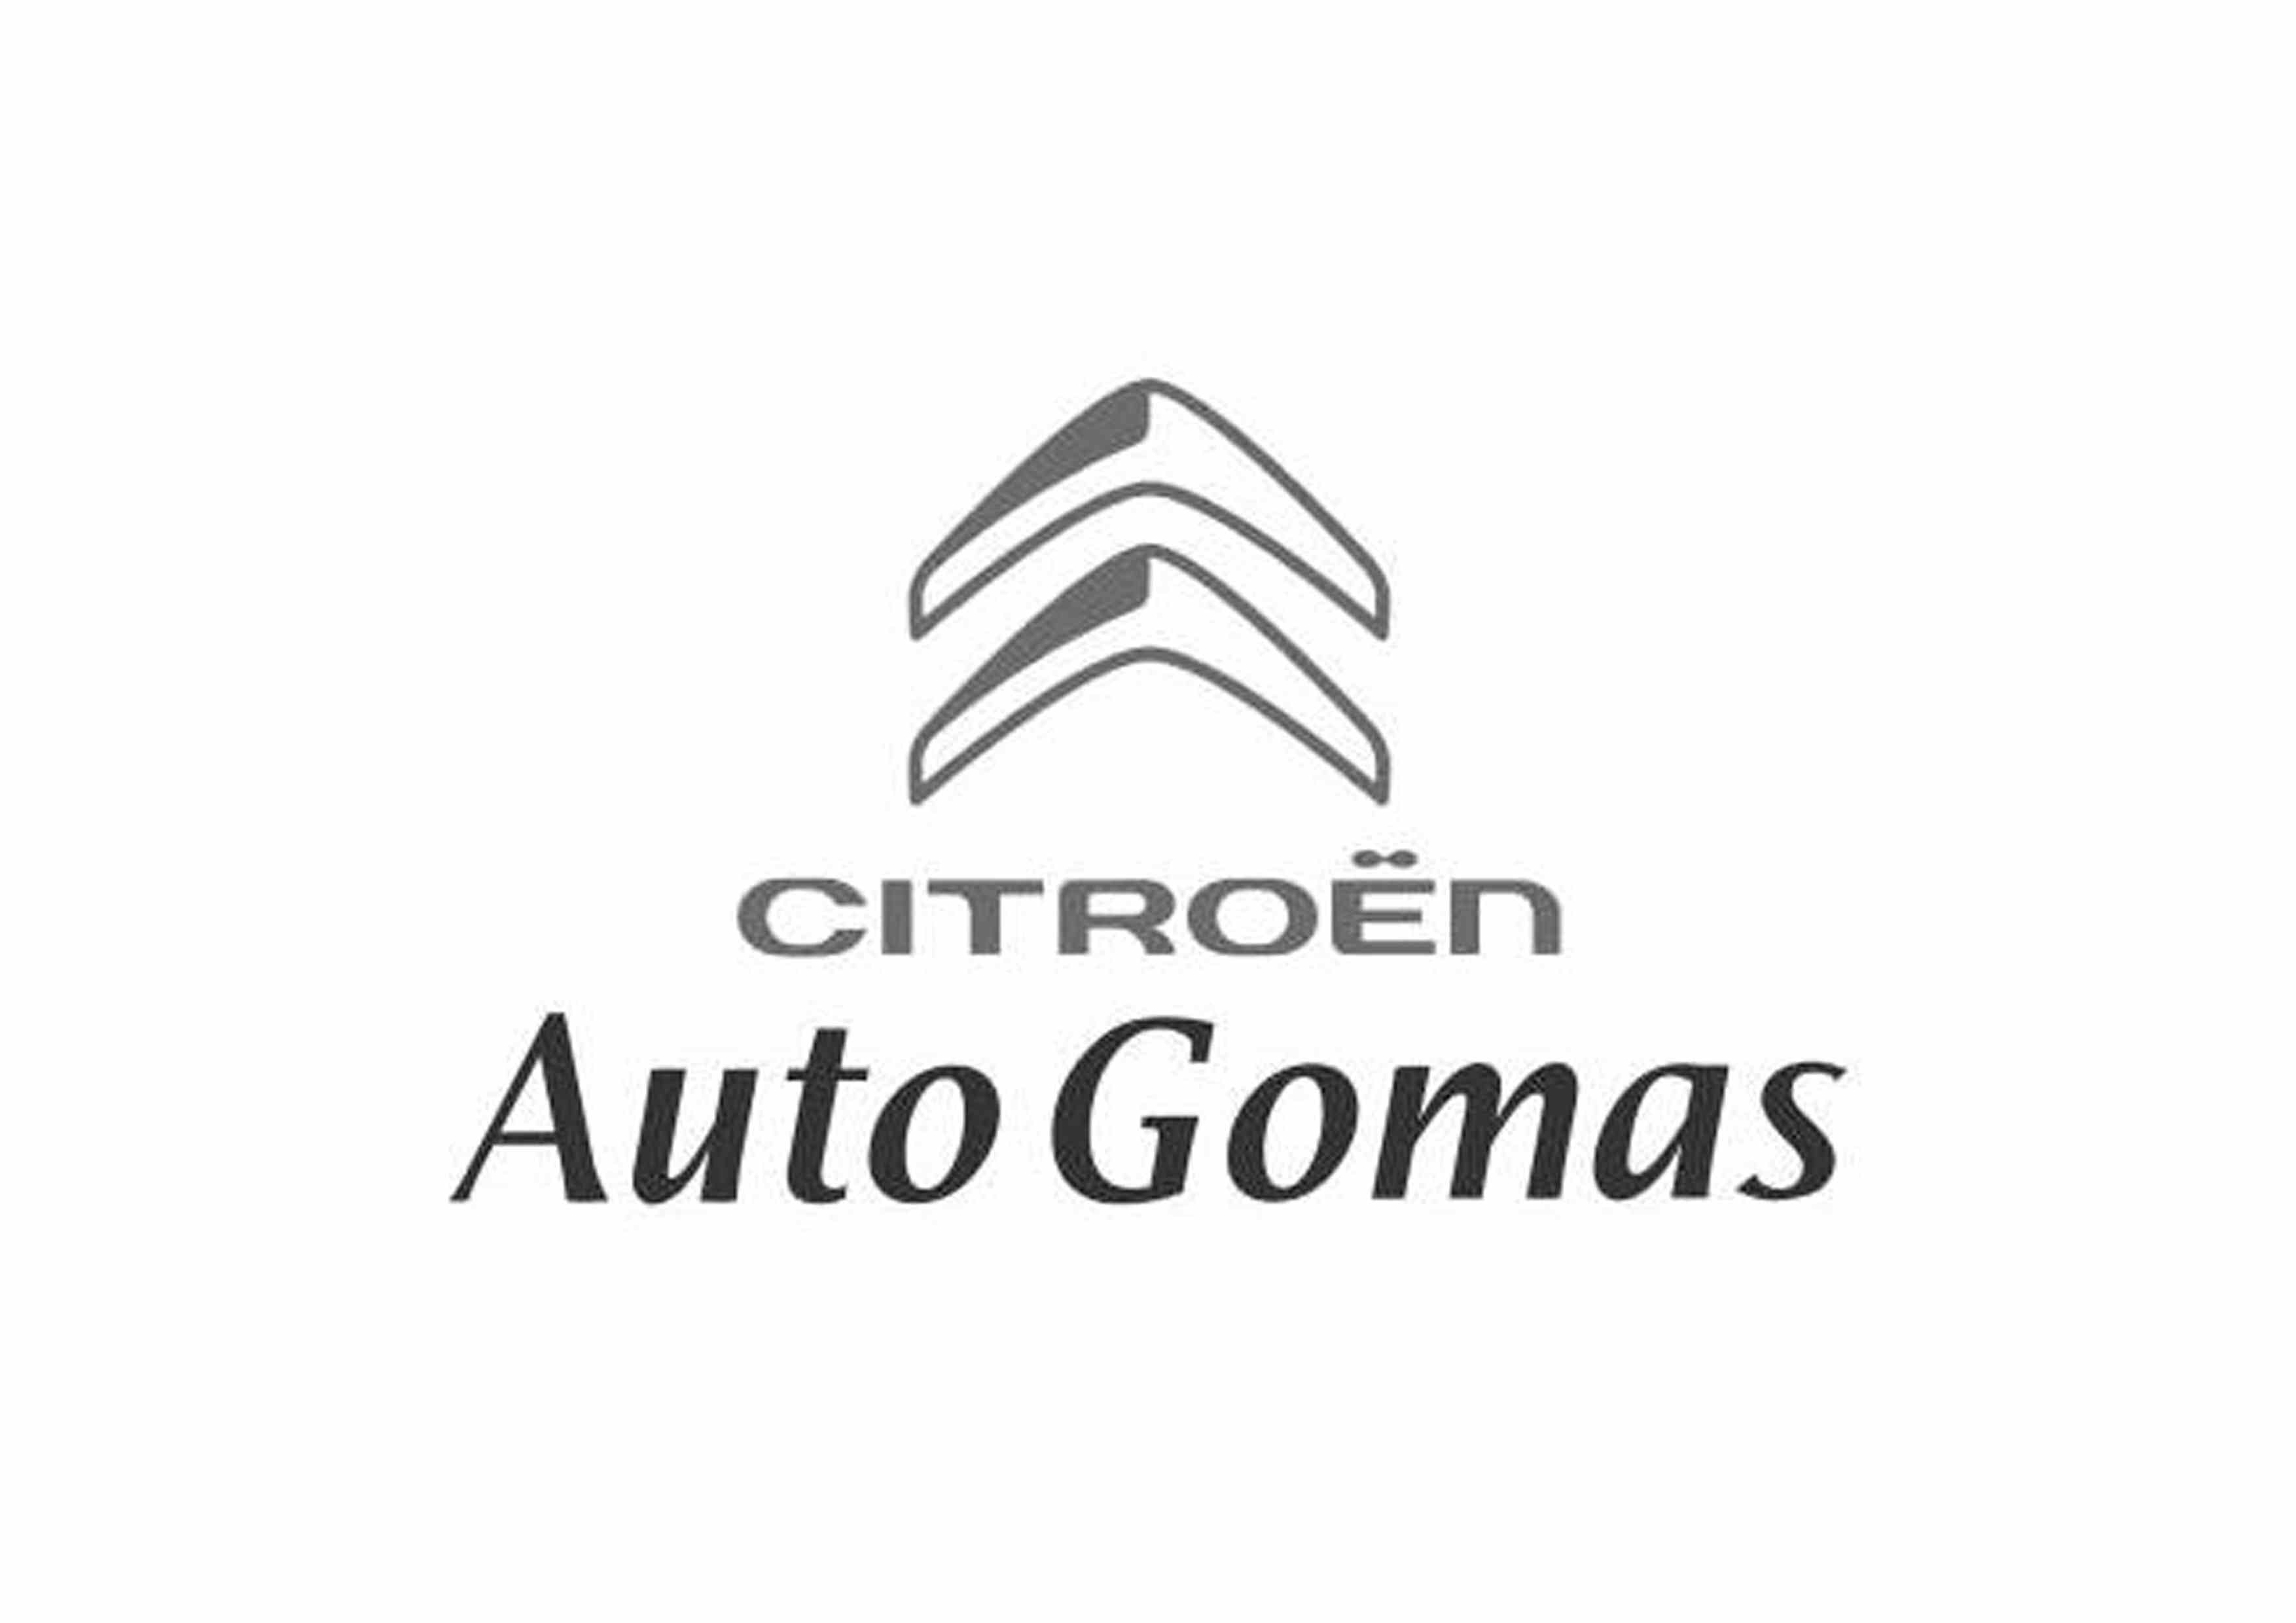 Citroën Autogomas